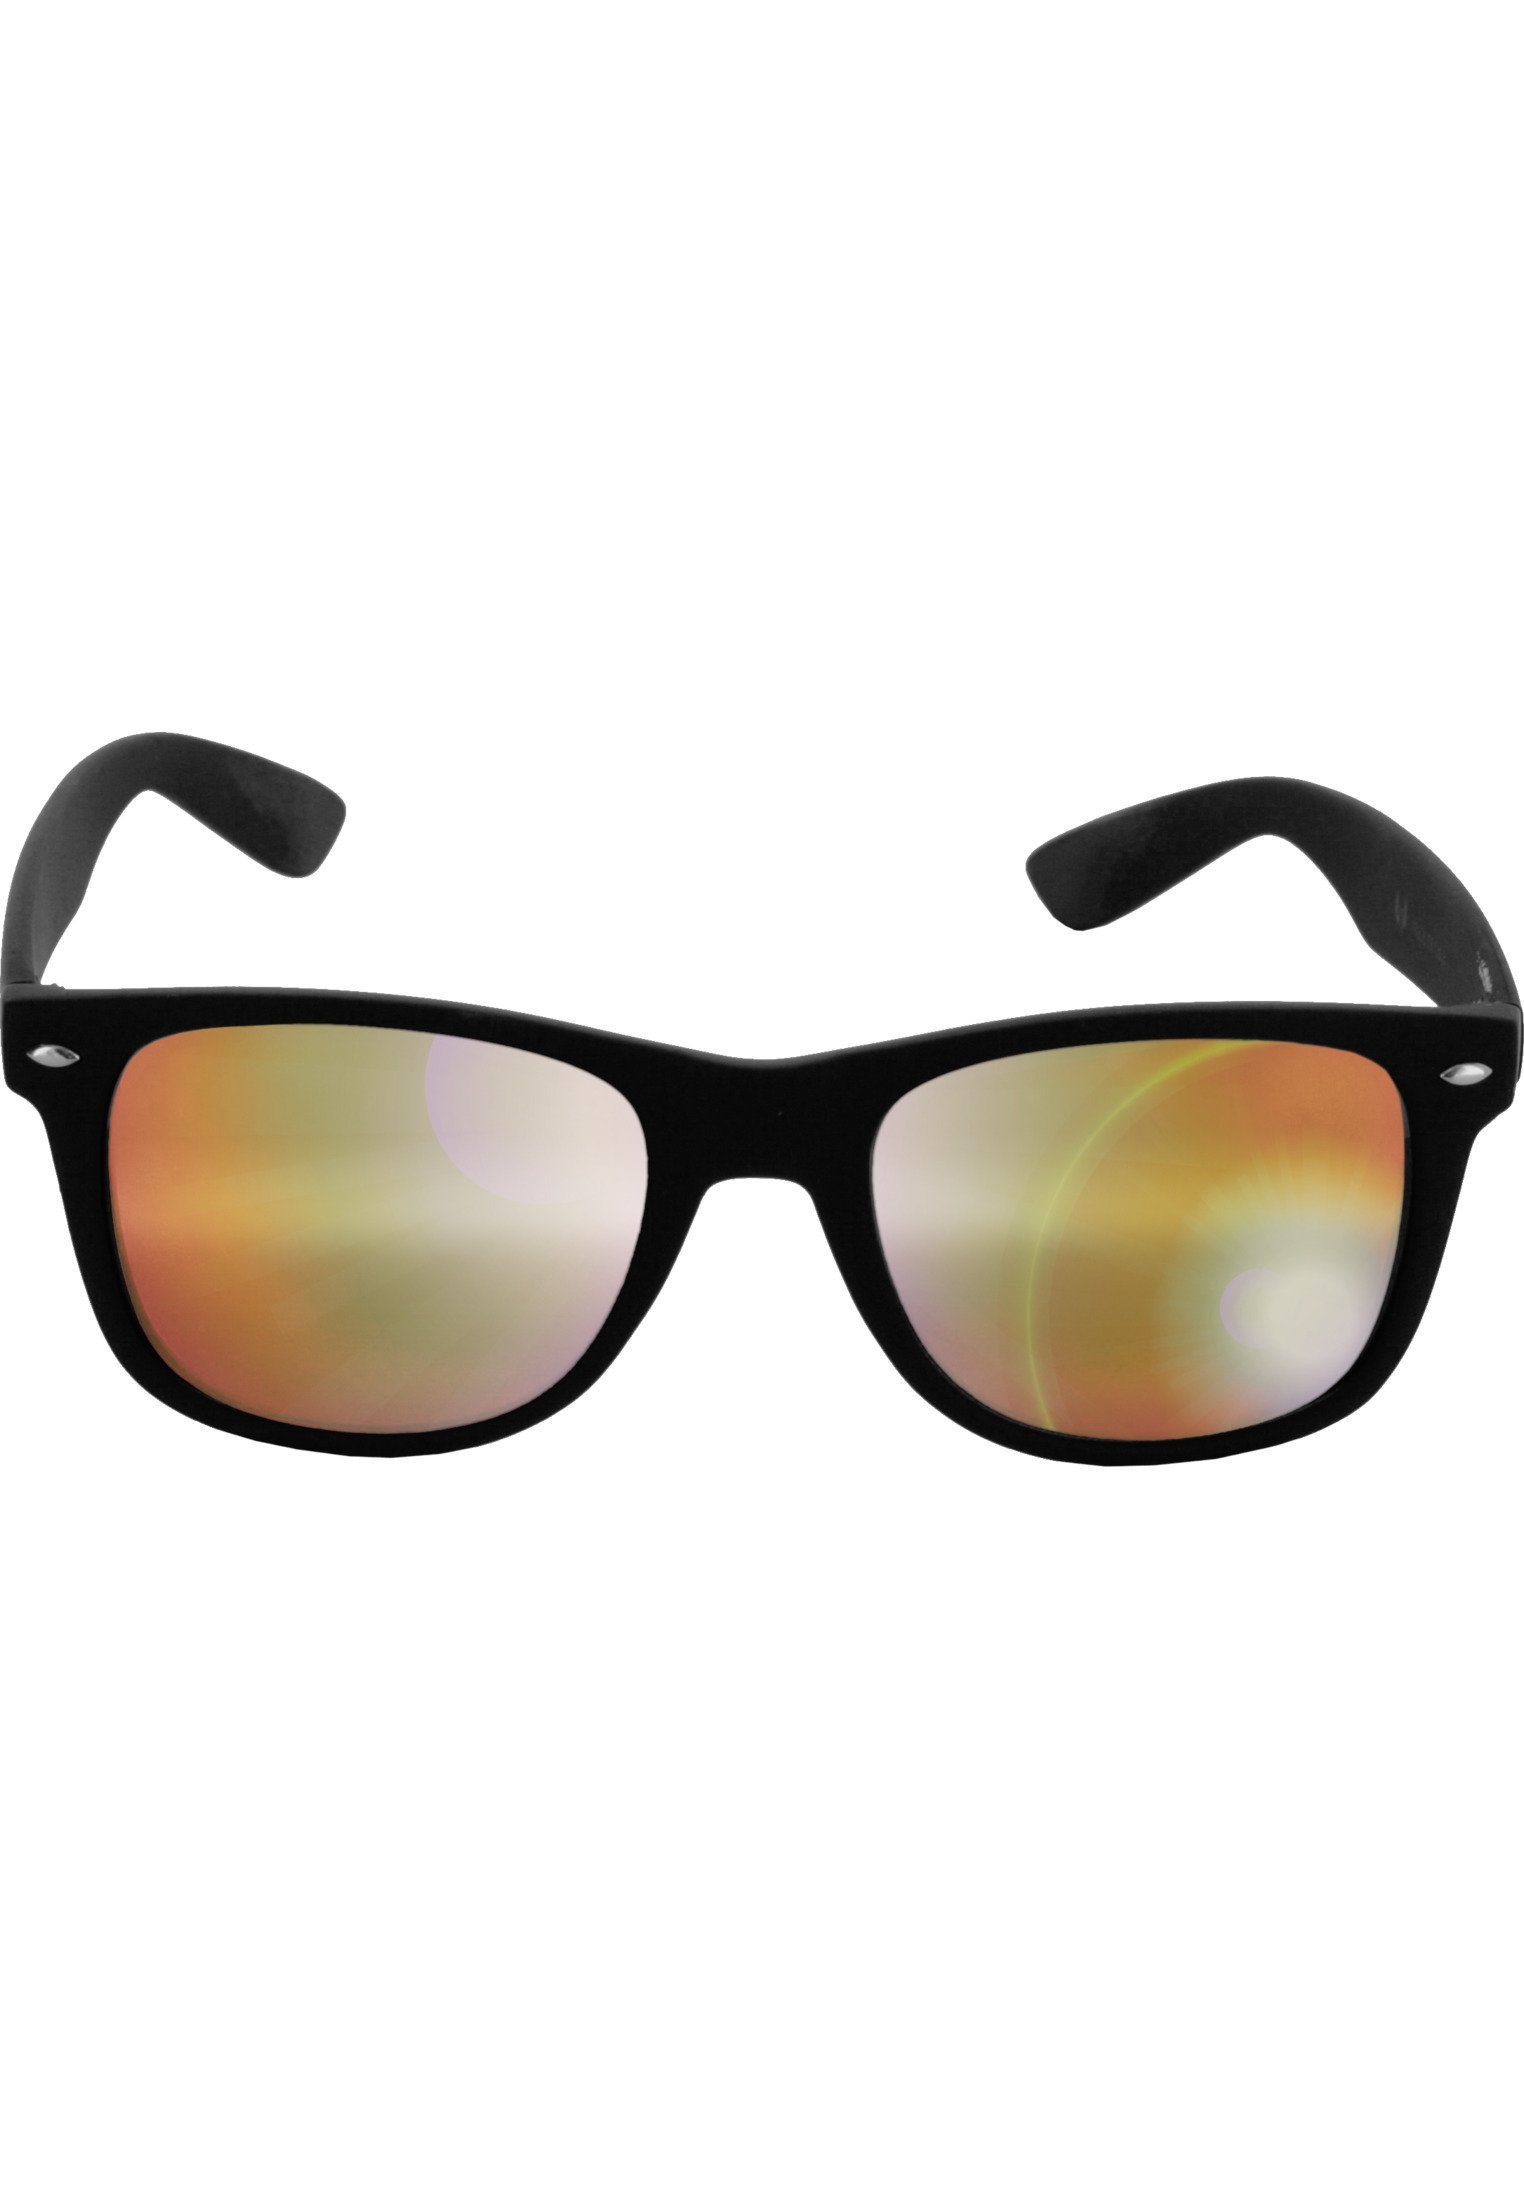 MSTRDS Sonnenbrille Accessoires Sunglasses Likoma Mirror blk/orange | Sonnenbrillen